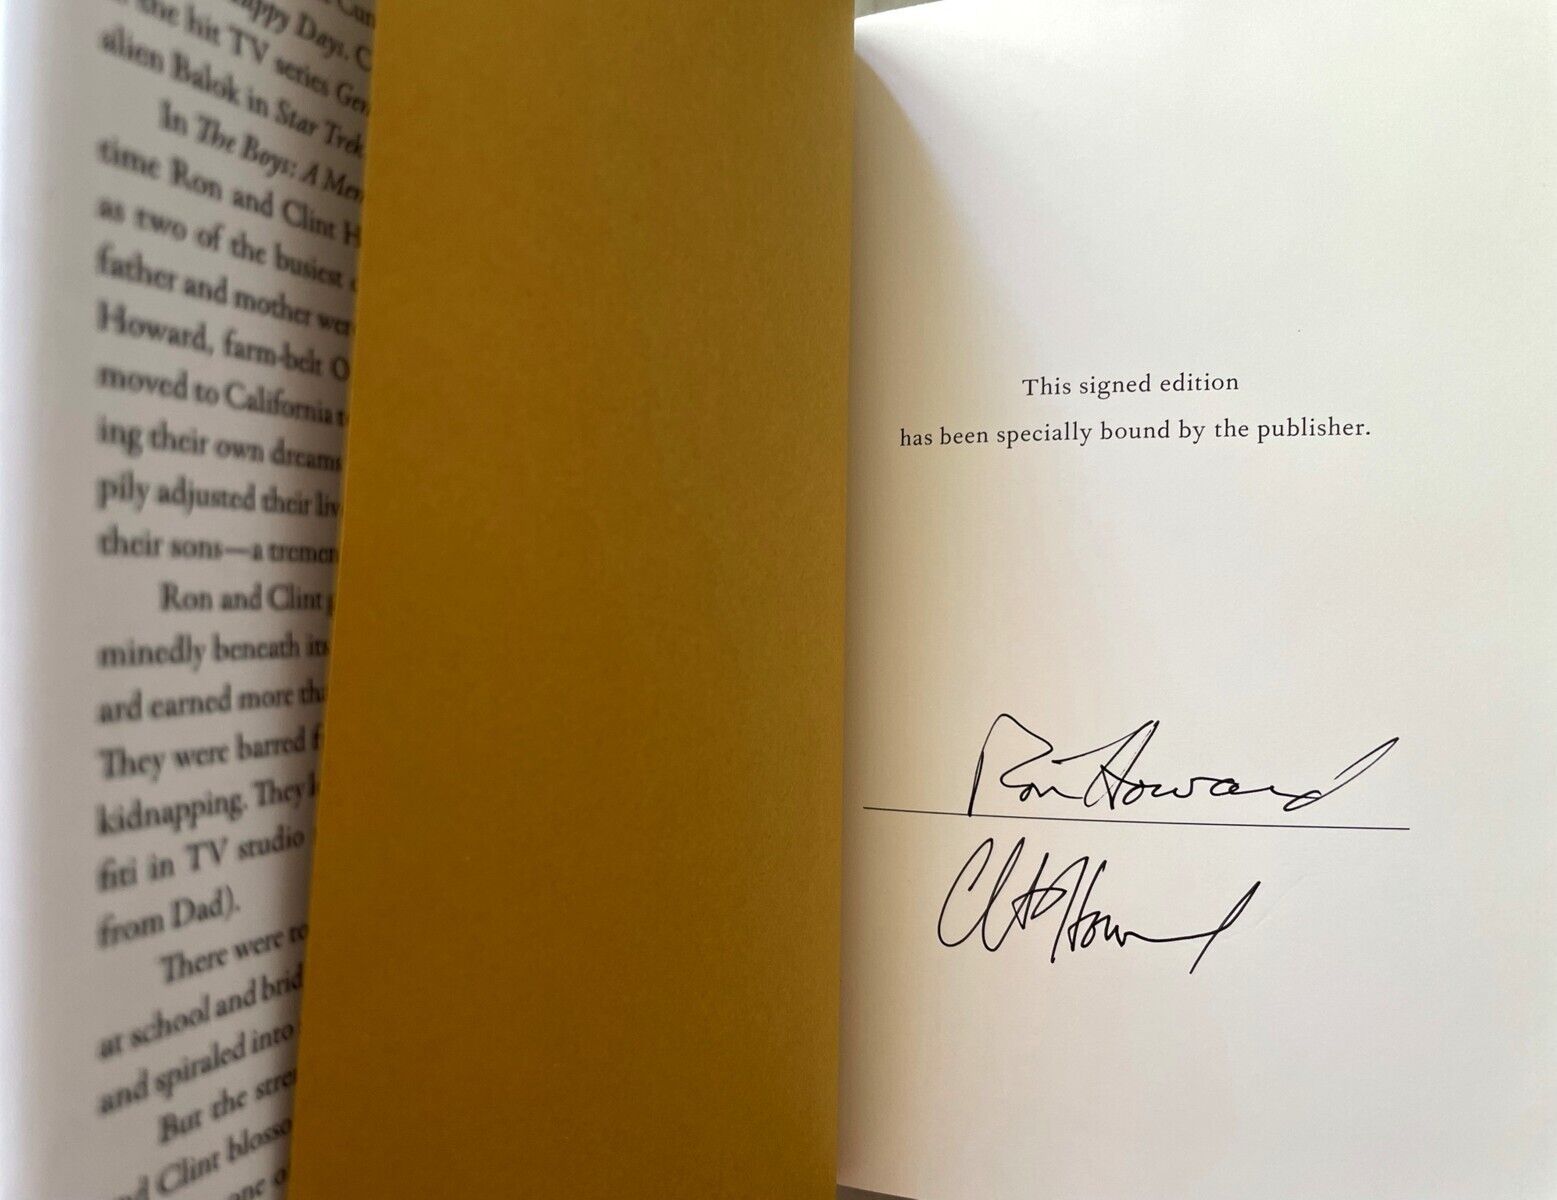 Ron Howard Clint Howard autographed signed autograph The Boys hardcover book COA